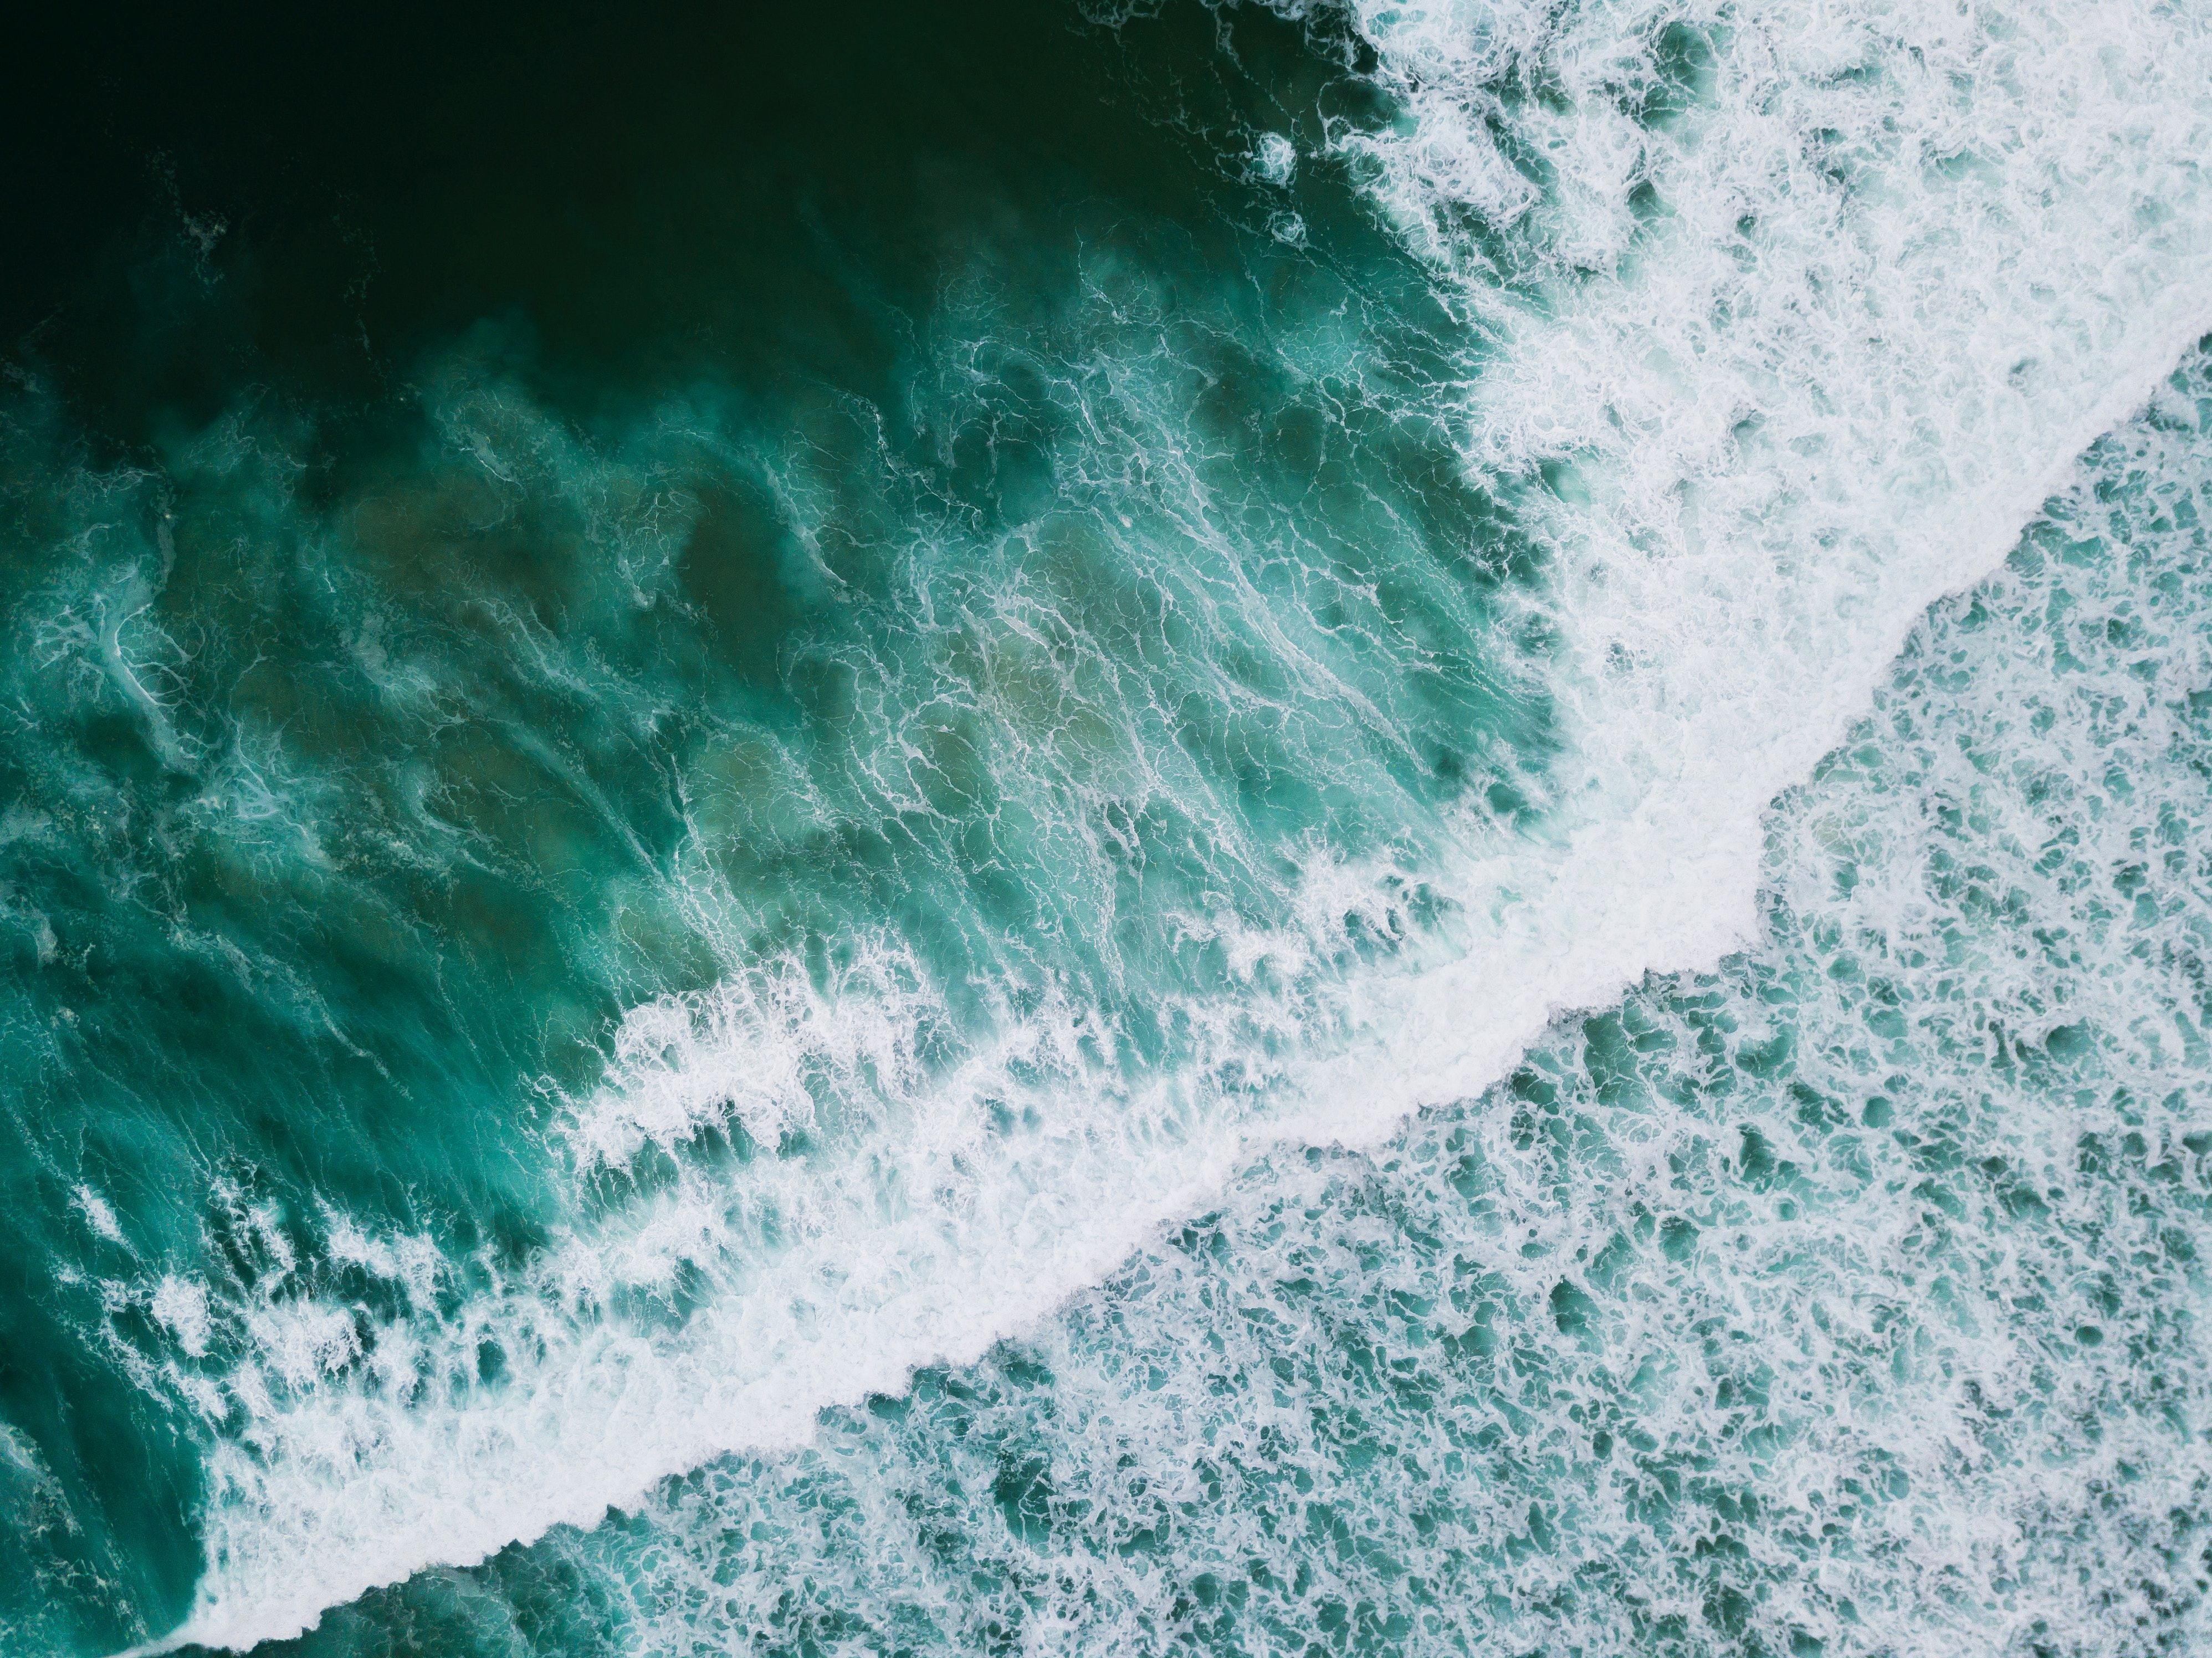 3992x2992 #ocean, #wave, #wafe, #drone, #waveing, #background, #water, #green water, #beach, #aerial, #wallpaper, #landscape, #sea, #nature, #Creative Commons image, #water green. Mocah.org HD Desktop Wallpaper